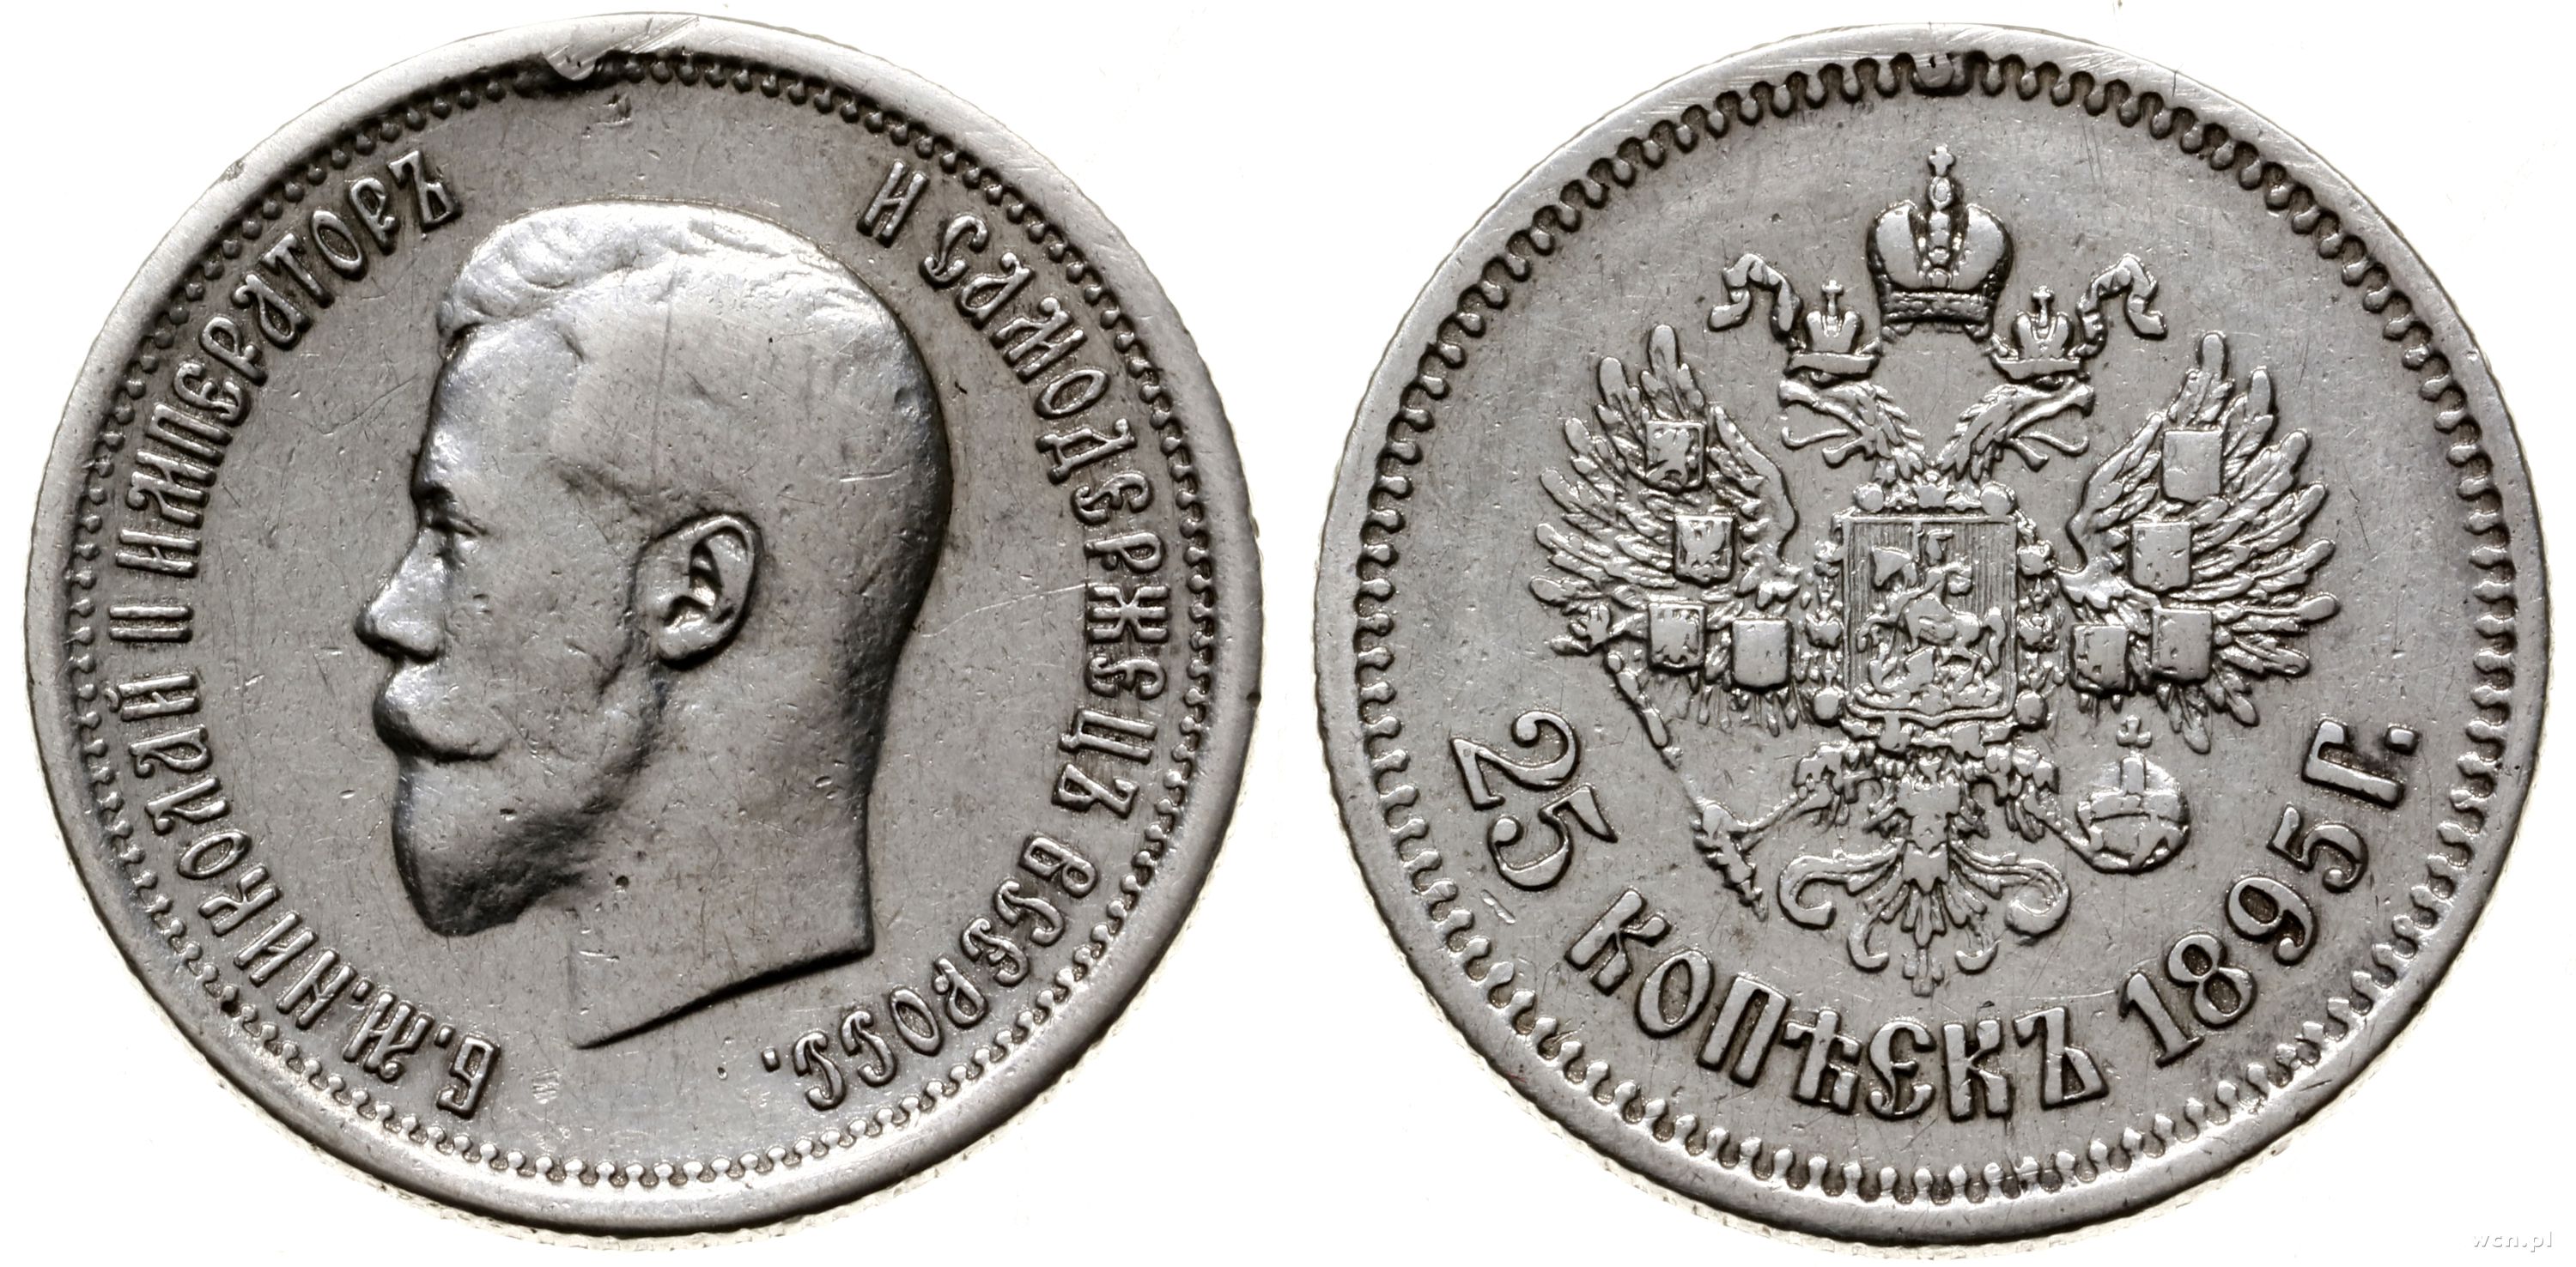 Монета 50 копеек года серебро. 50 Копеек 1897 *. Царский рубль серебряный 1899 года. Монета 50 копеек 1897 года.